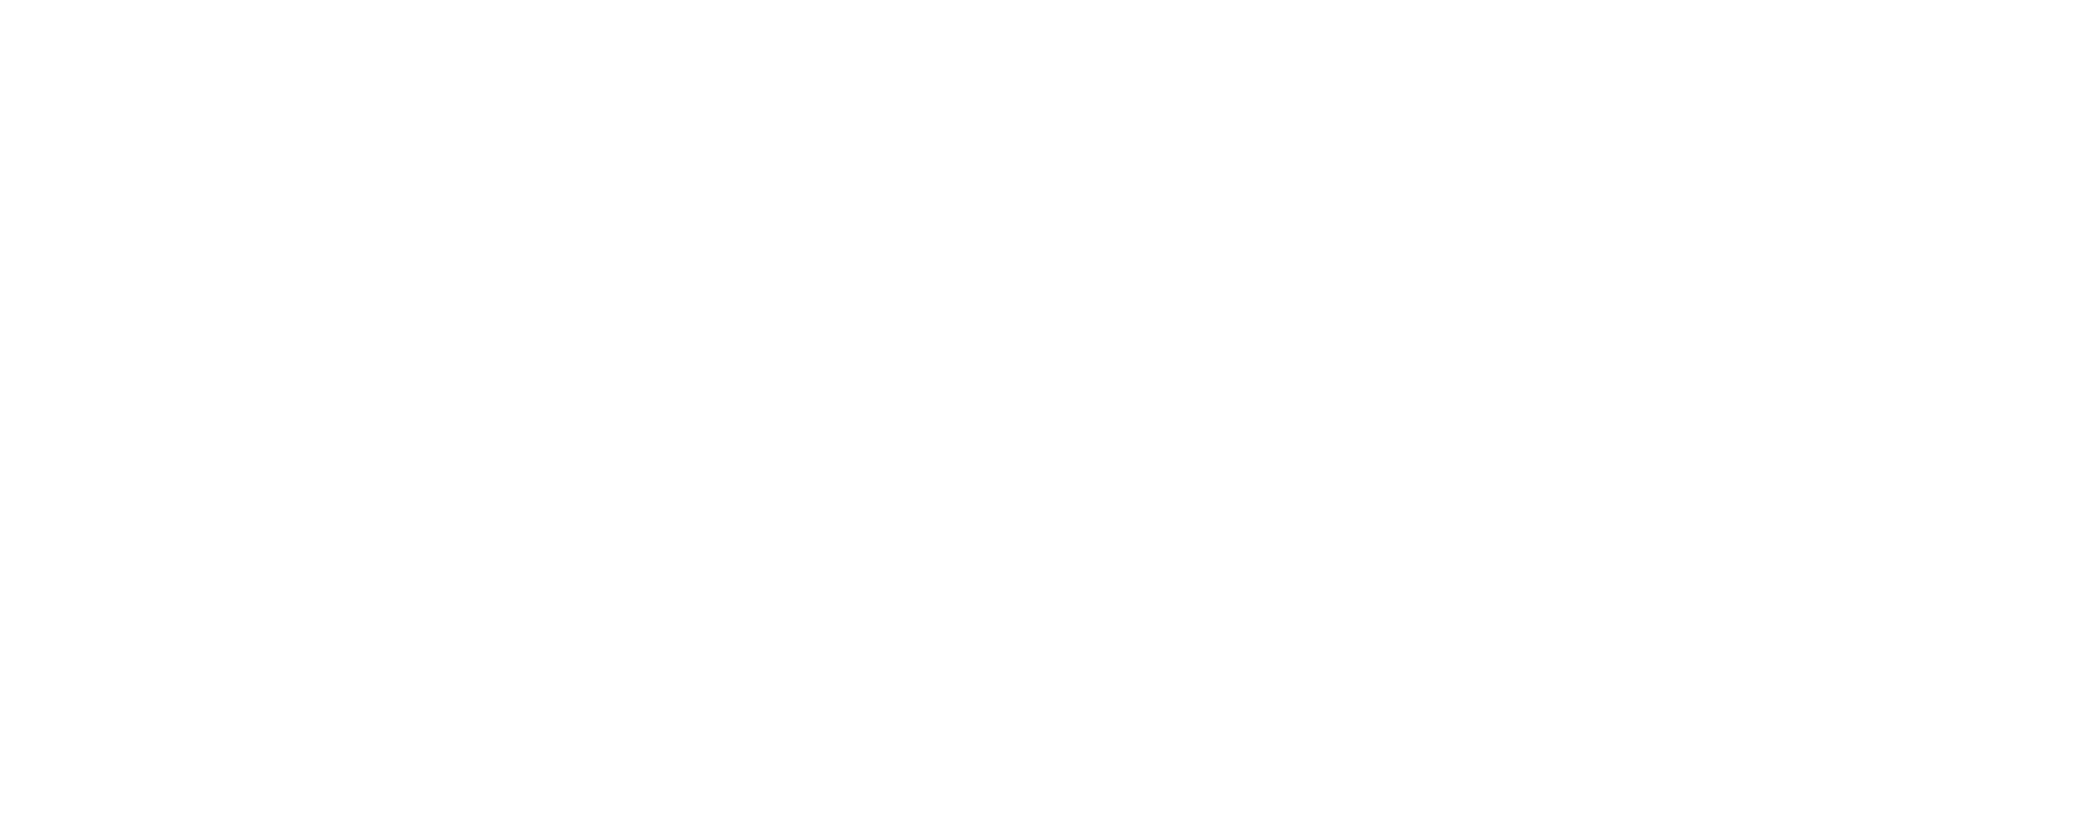 Covestro White 3b logo